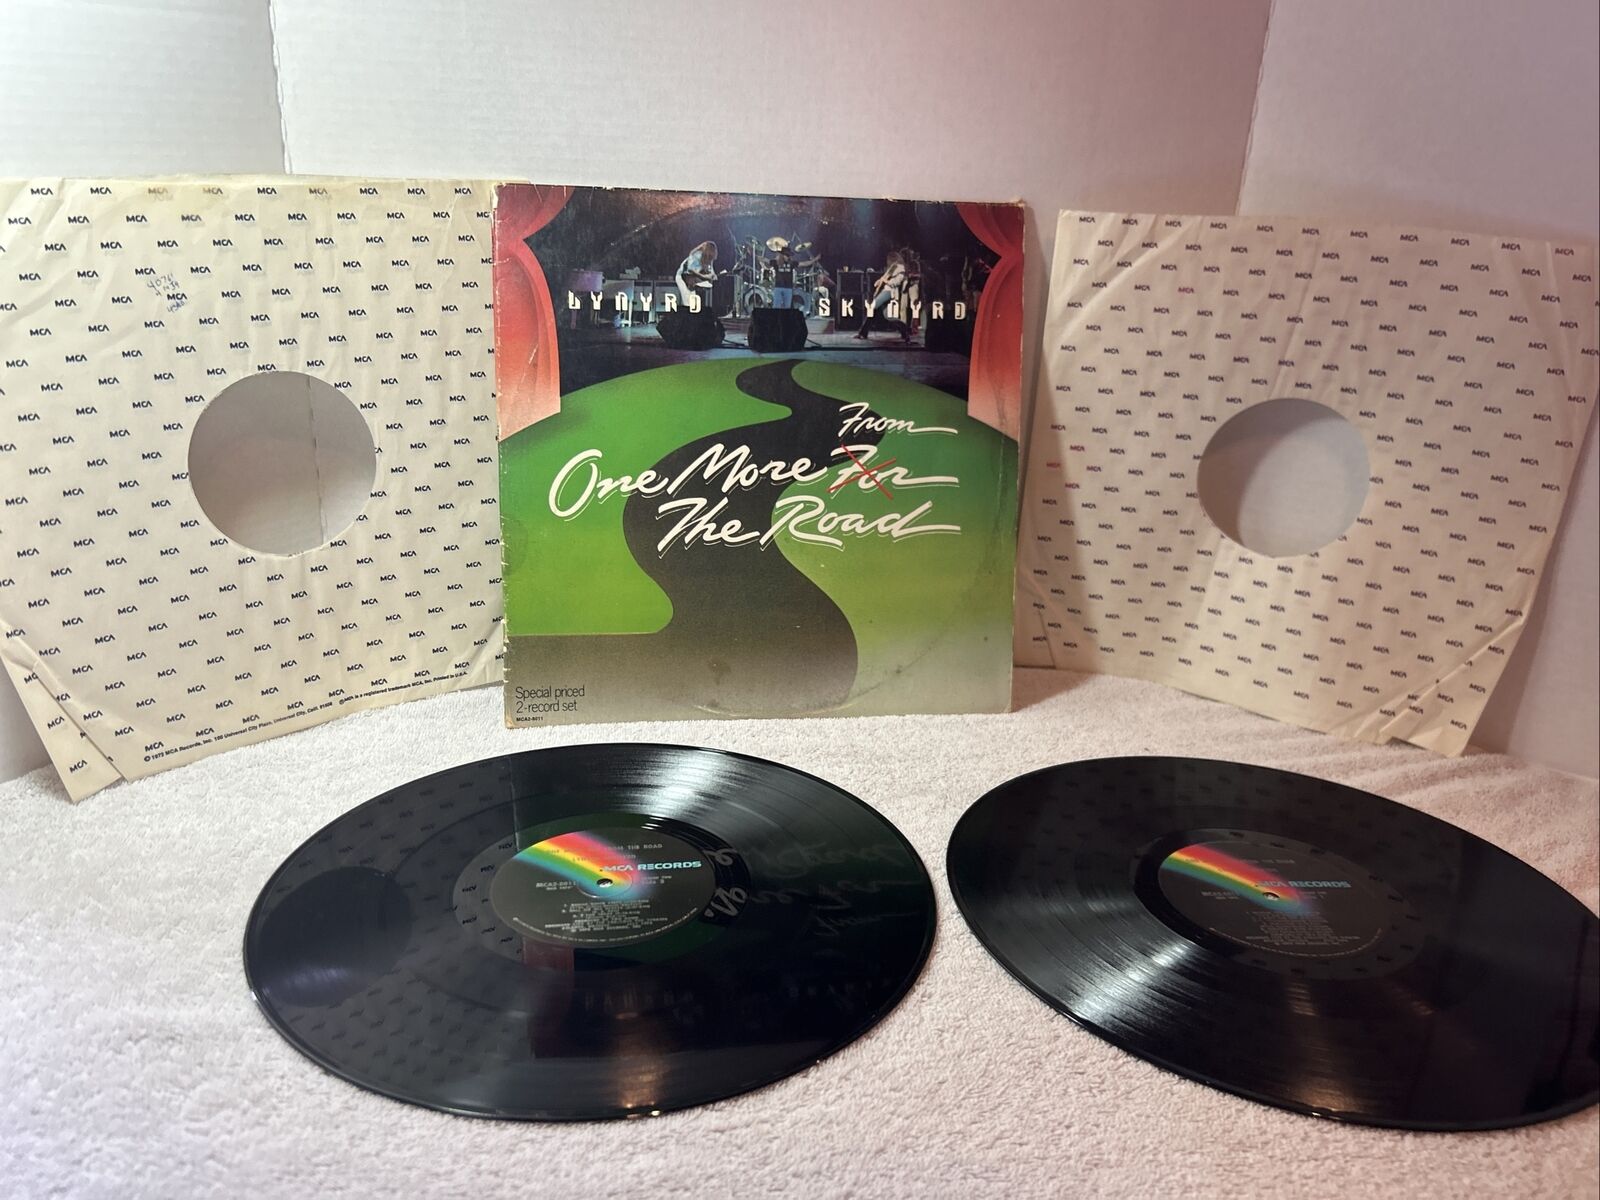 LYNYRD SKYNYRD - One More From The Road - Vinyl 2x LP 1976 1st Press MCA2-8011 